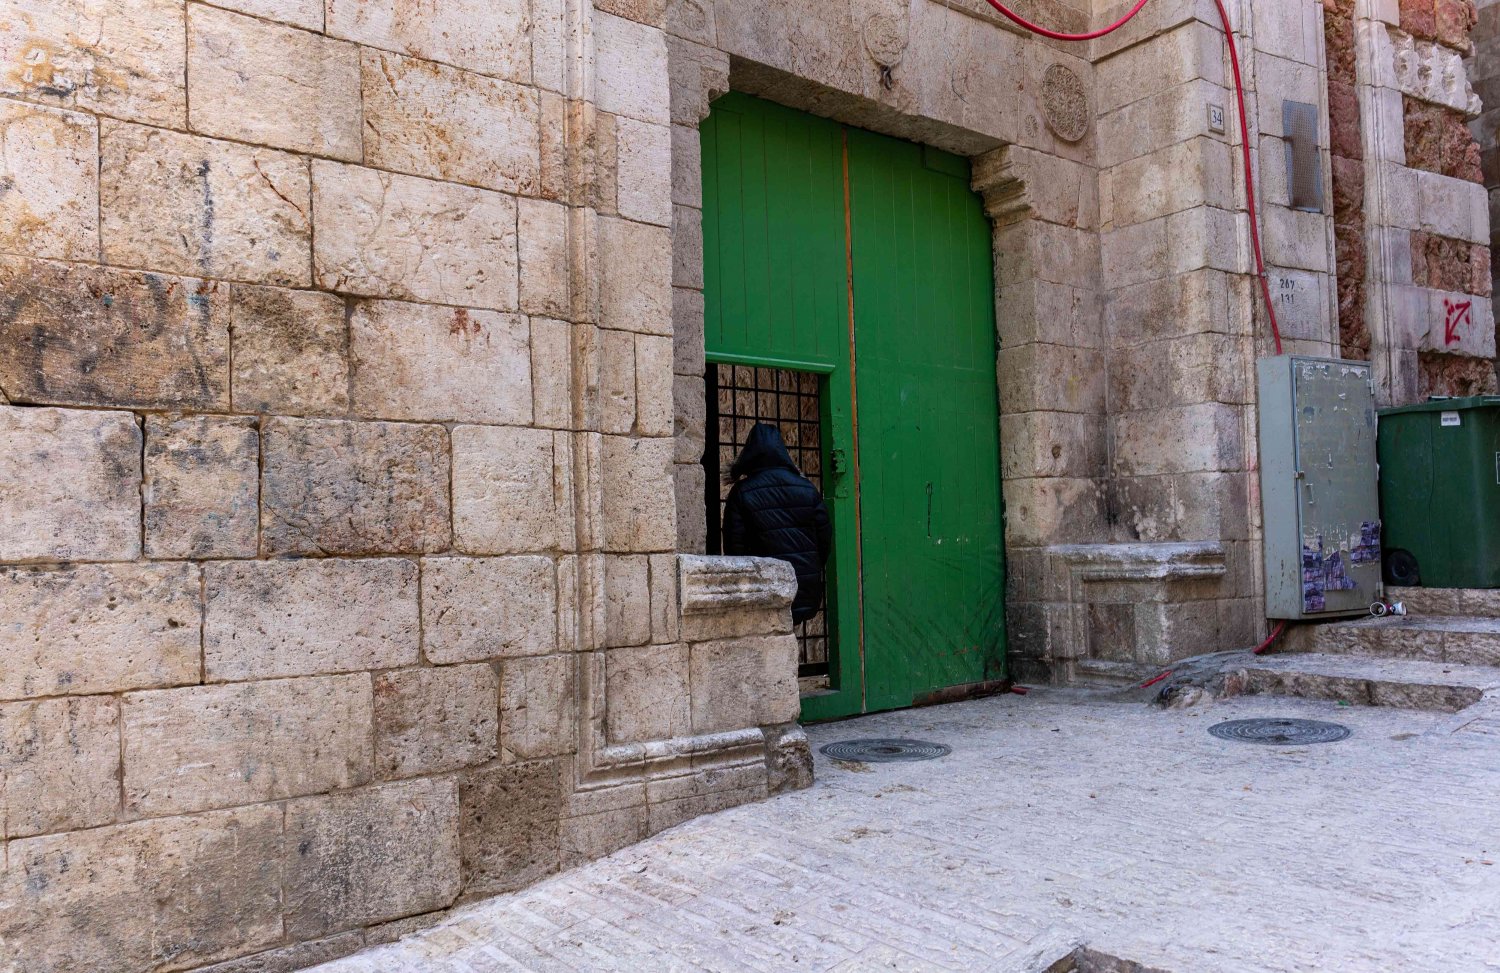 The main entrance to the Dar al-Aytam al-Islamiyya complex in the Old City of Jerusalem